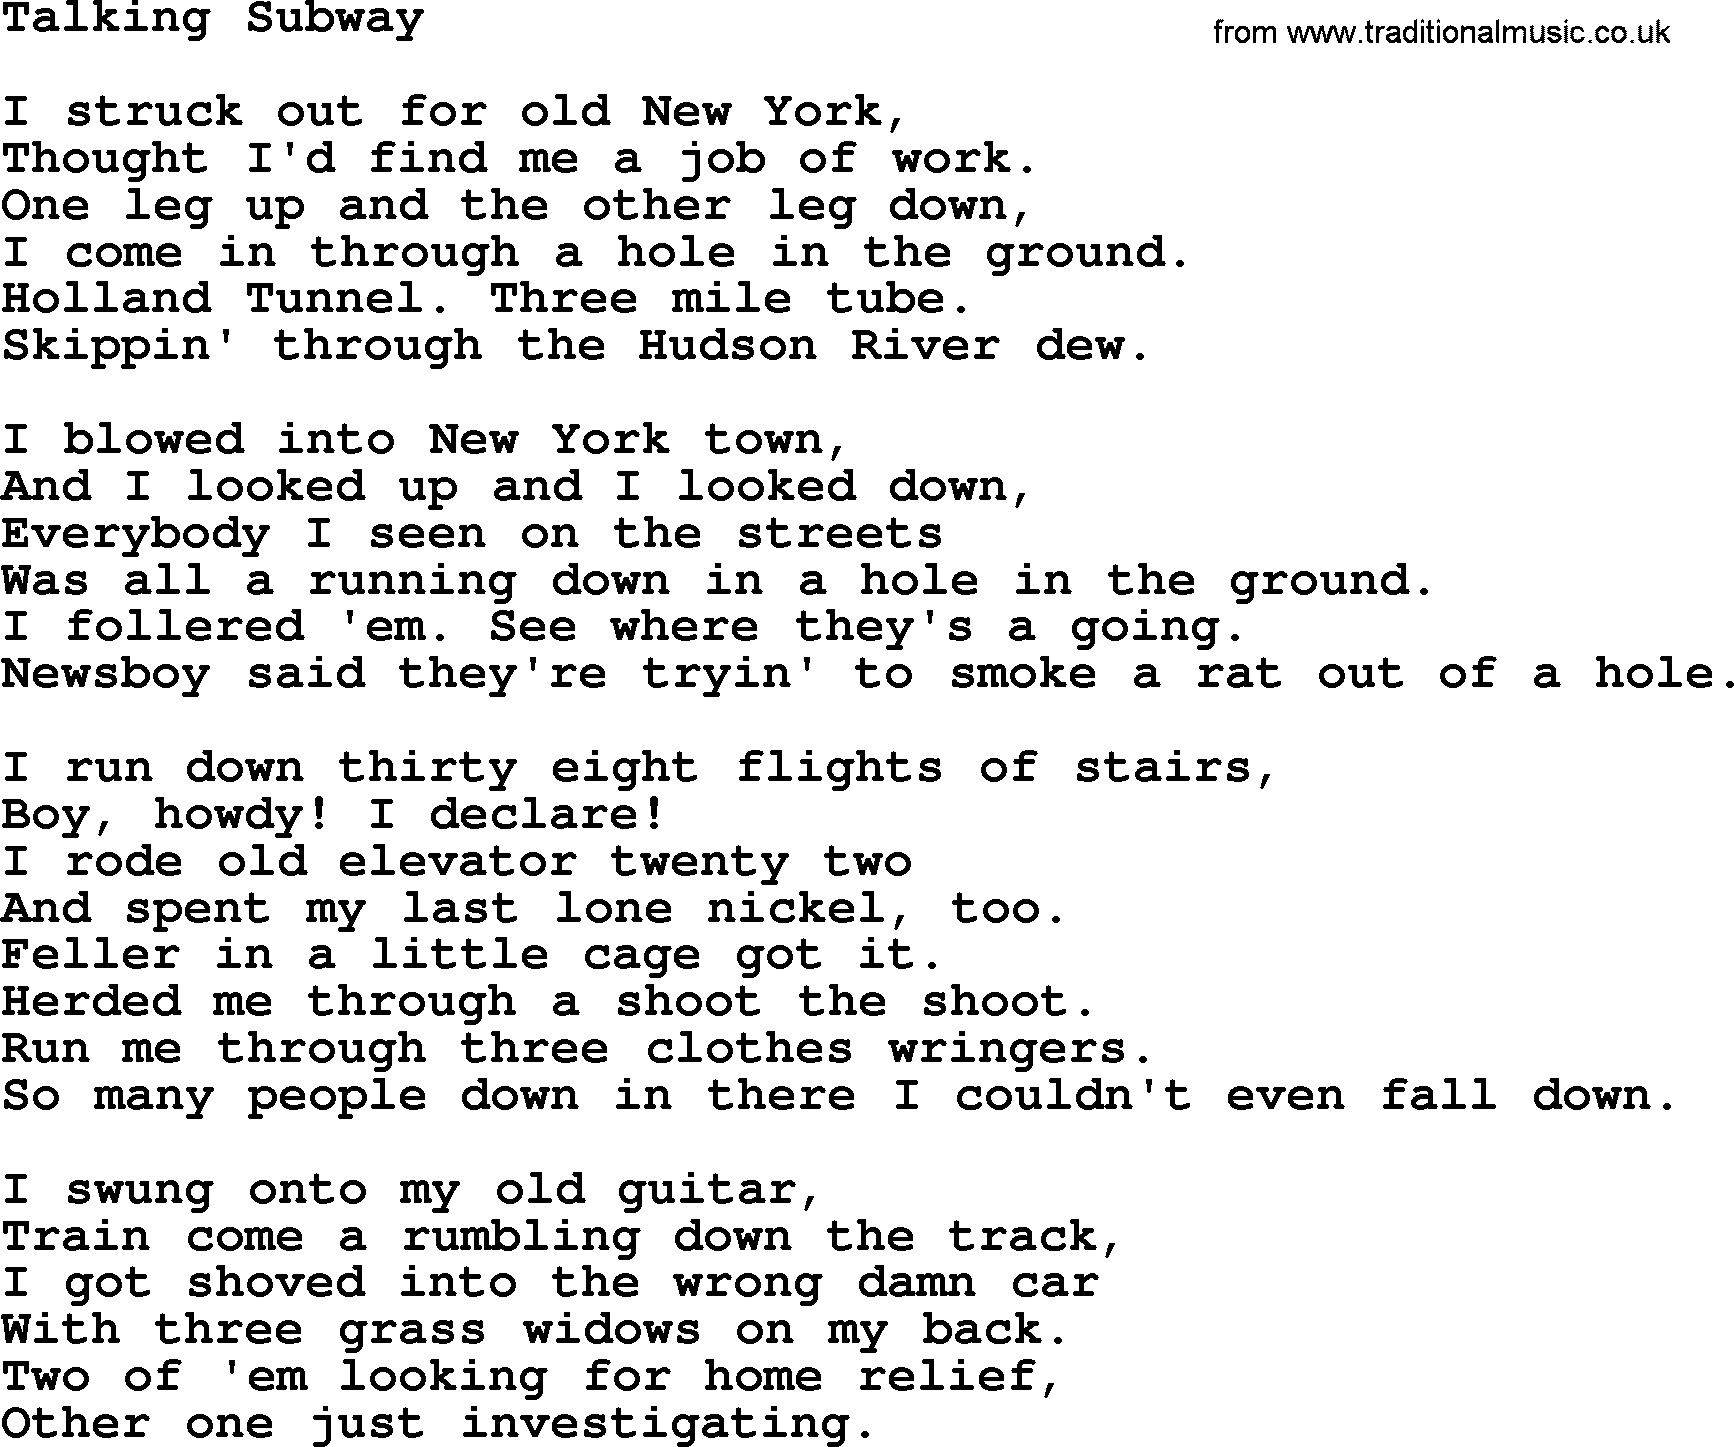 Woody Guthrie song Talking Subway lyrics